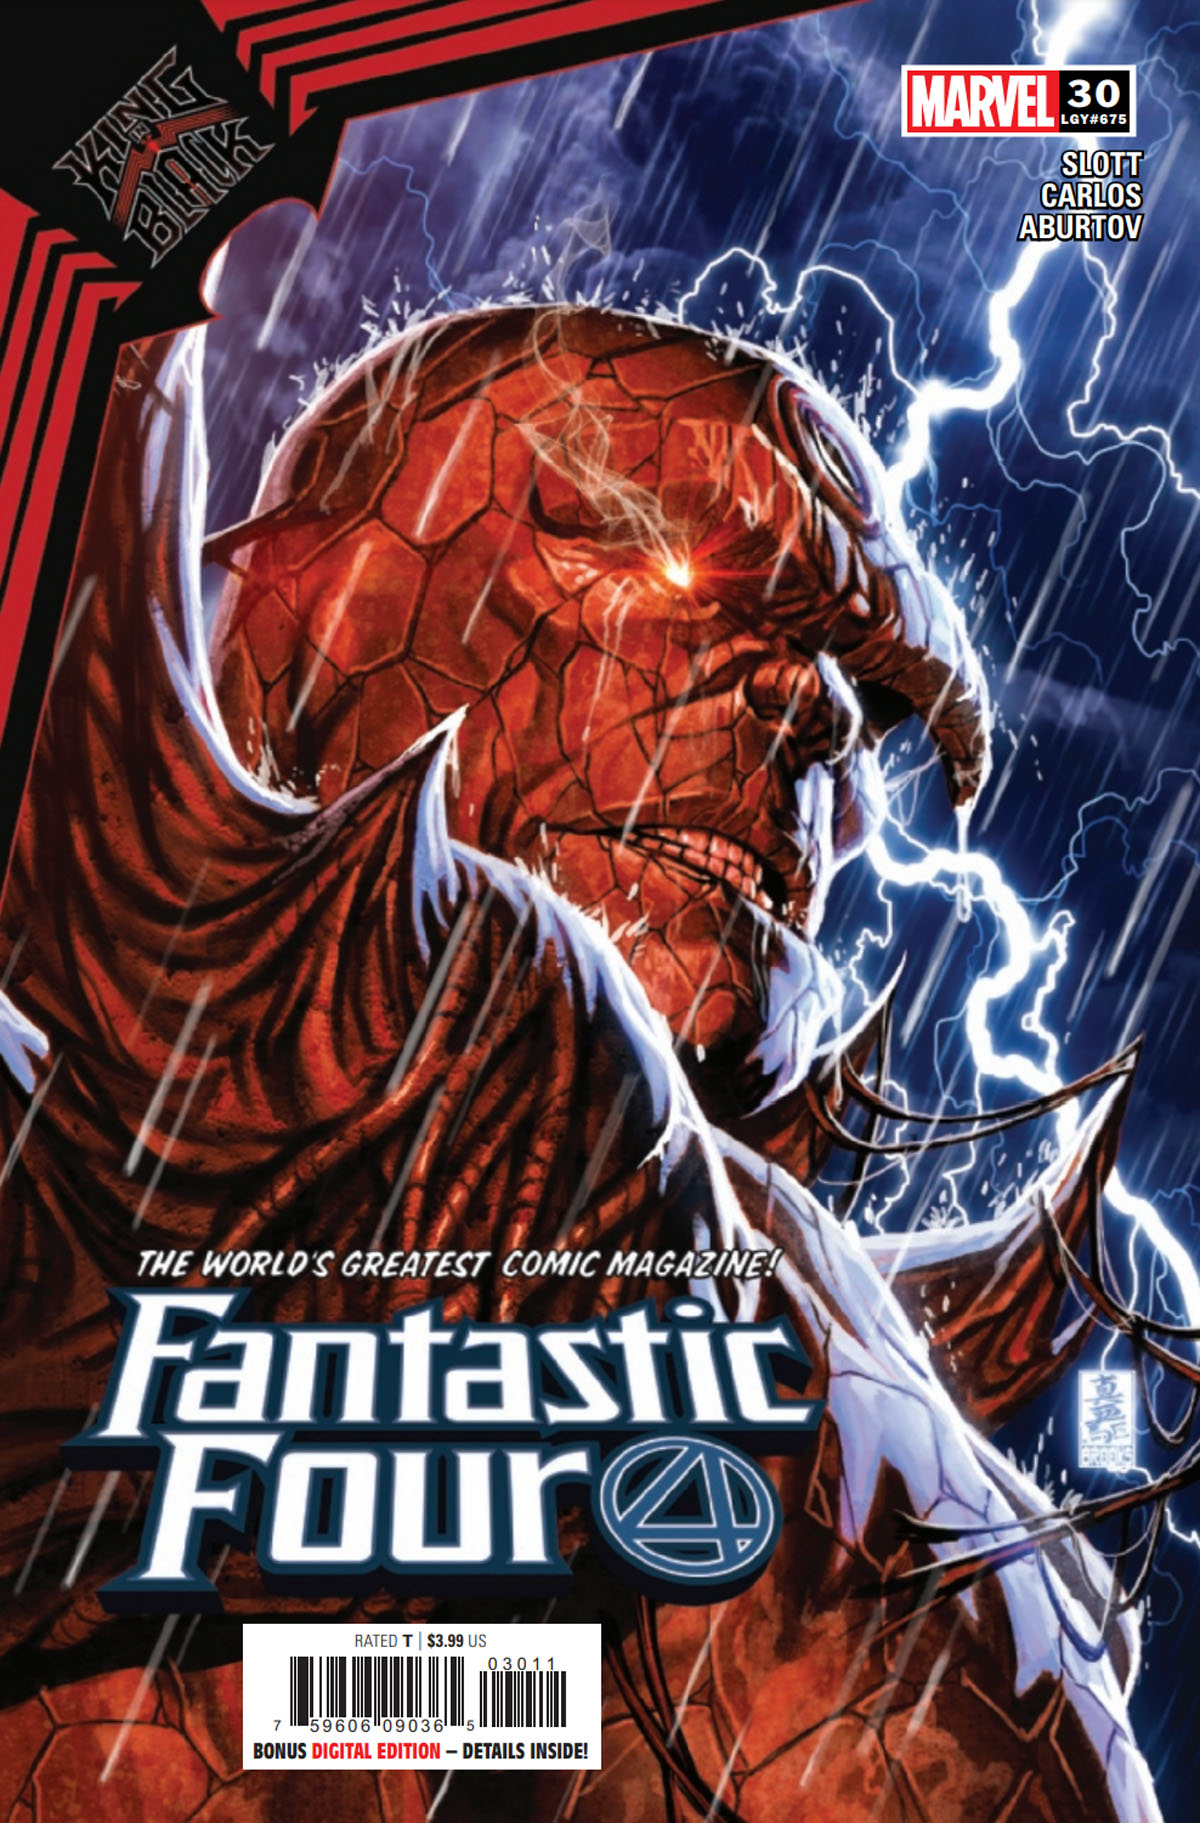 Fantastic Four #30 cover